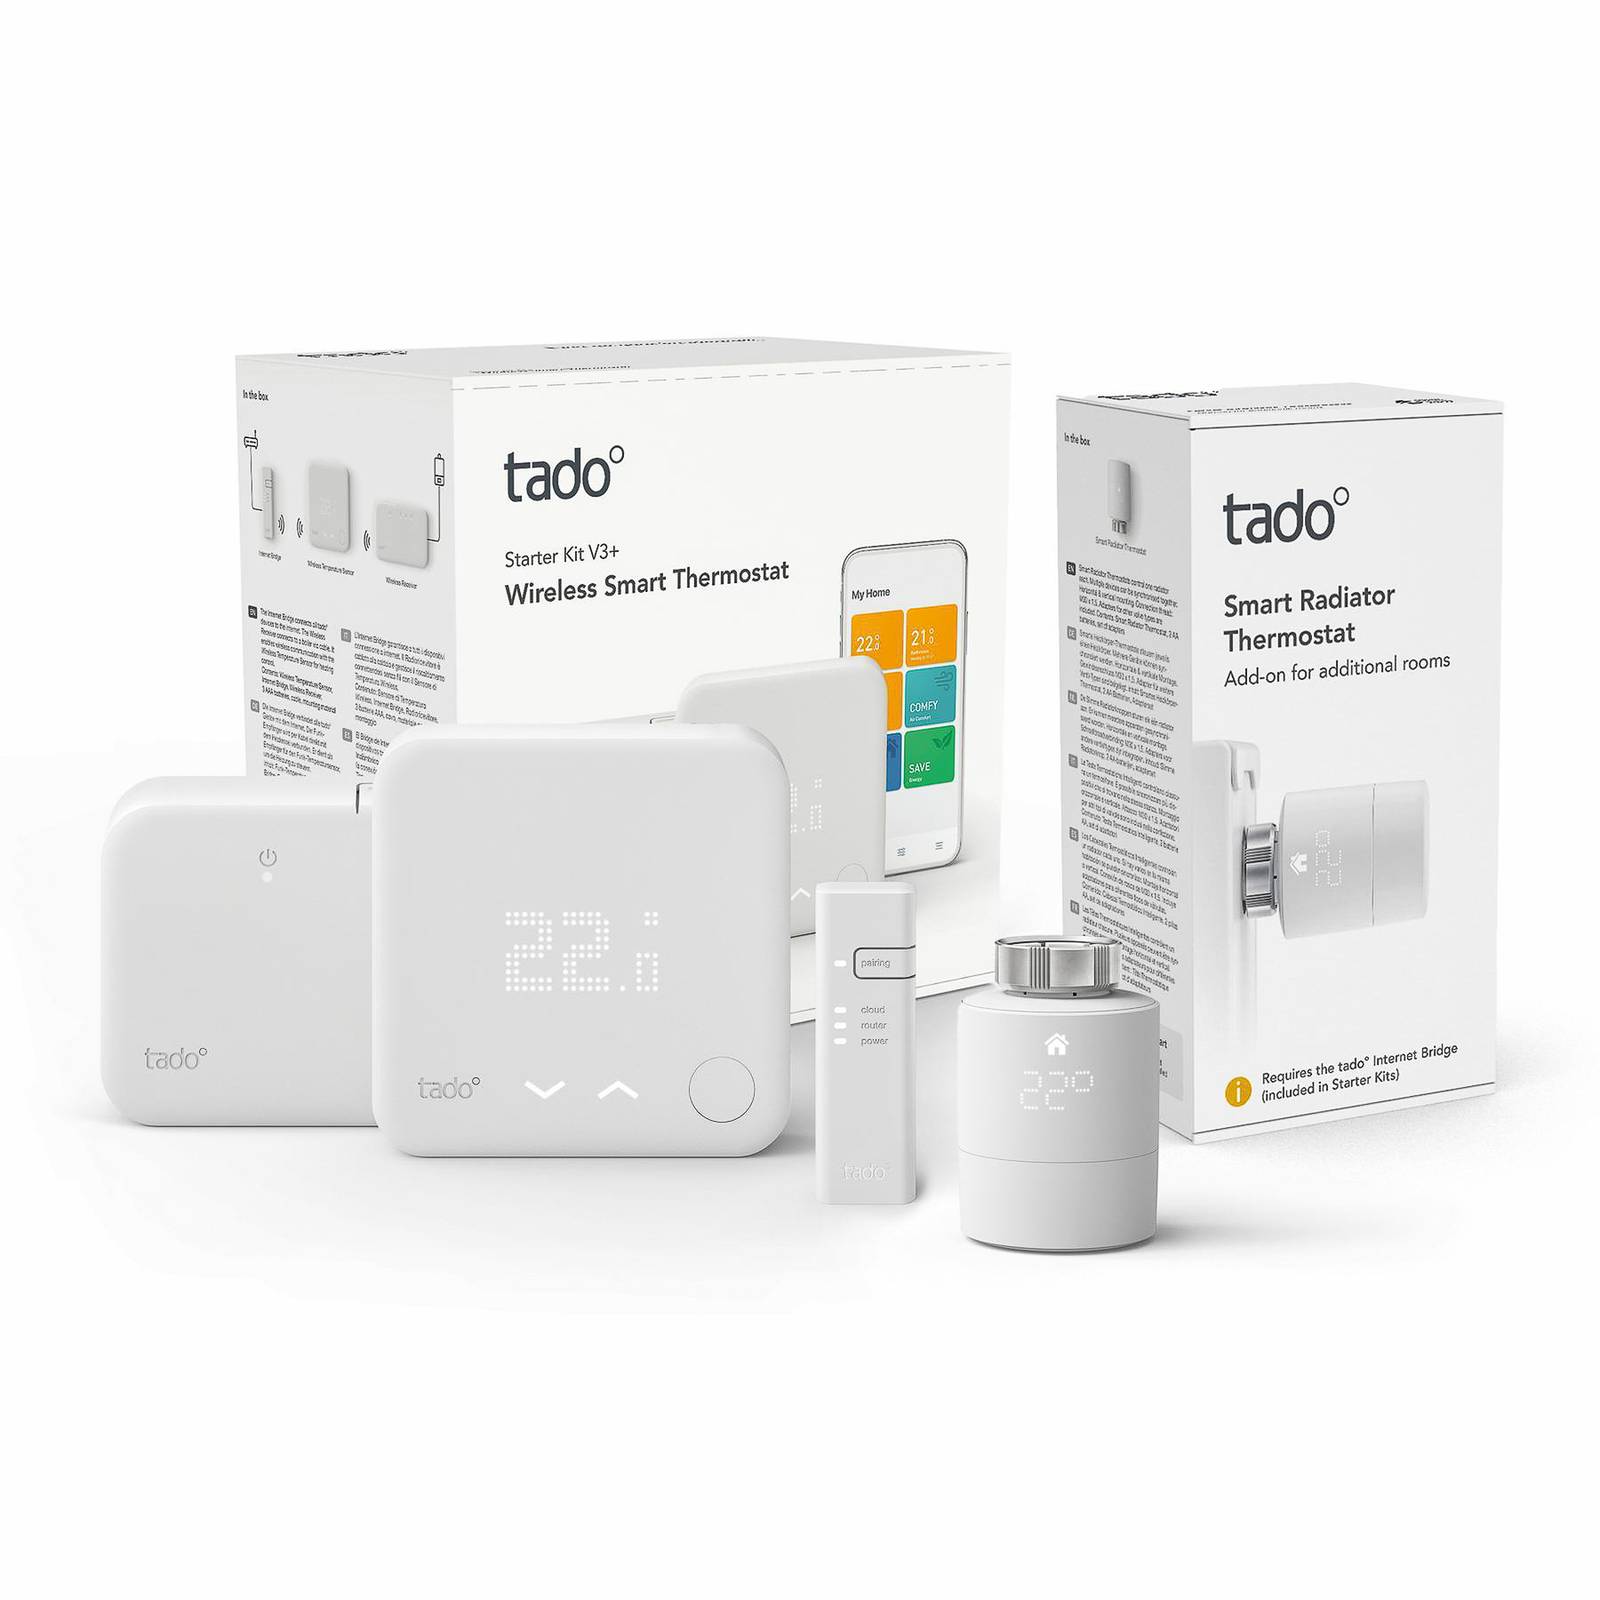 Image of tado° Smart Thermostat Starter Kit V3+ radio 